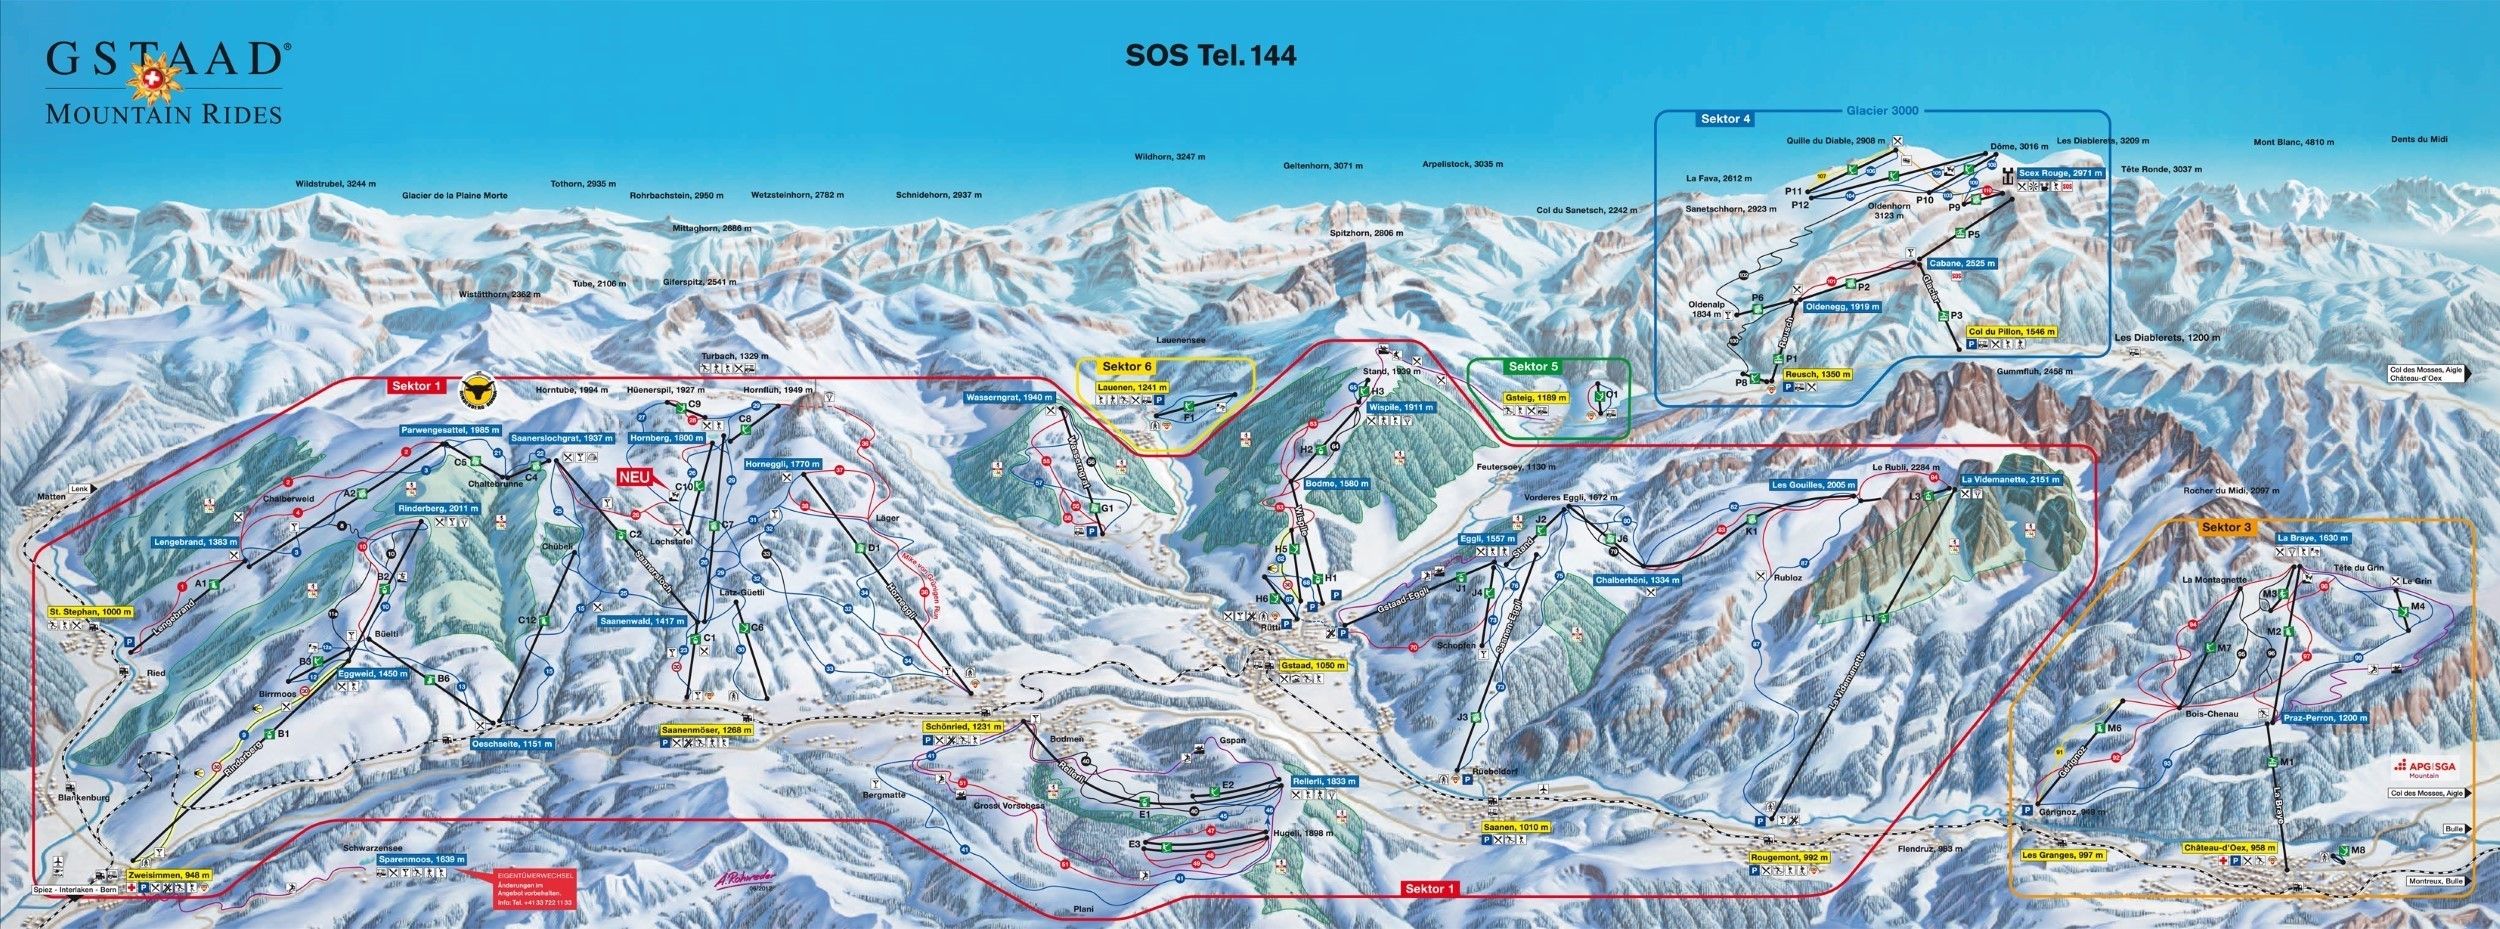 Pistenplan / Karte Skigebiet Gstaad, Schweiz